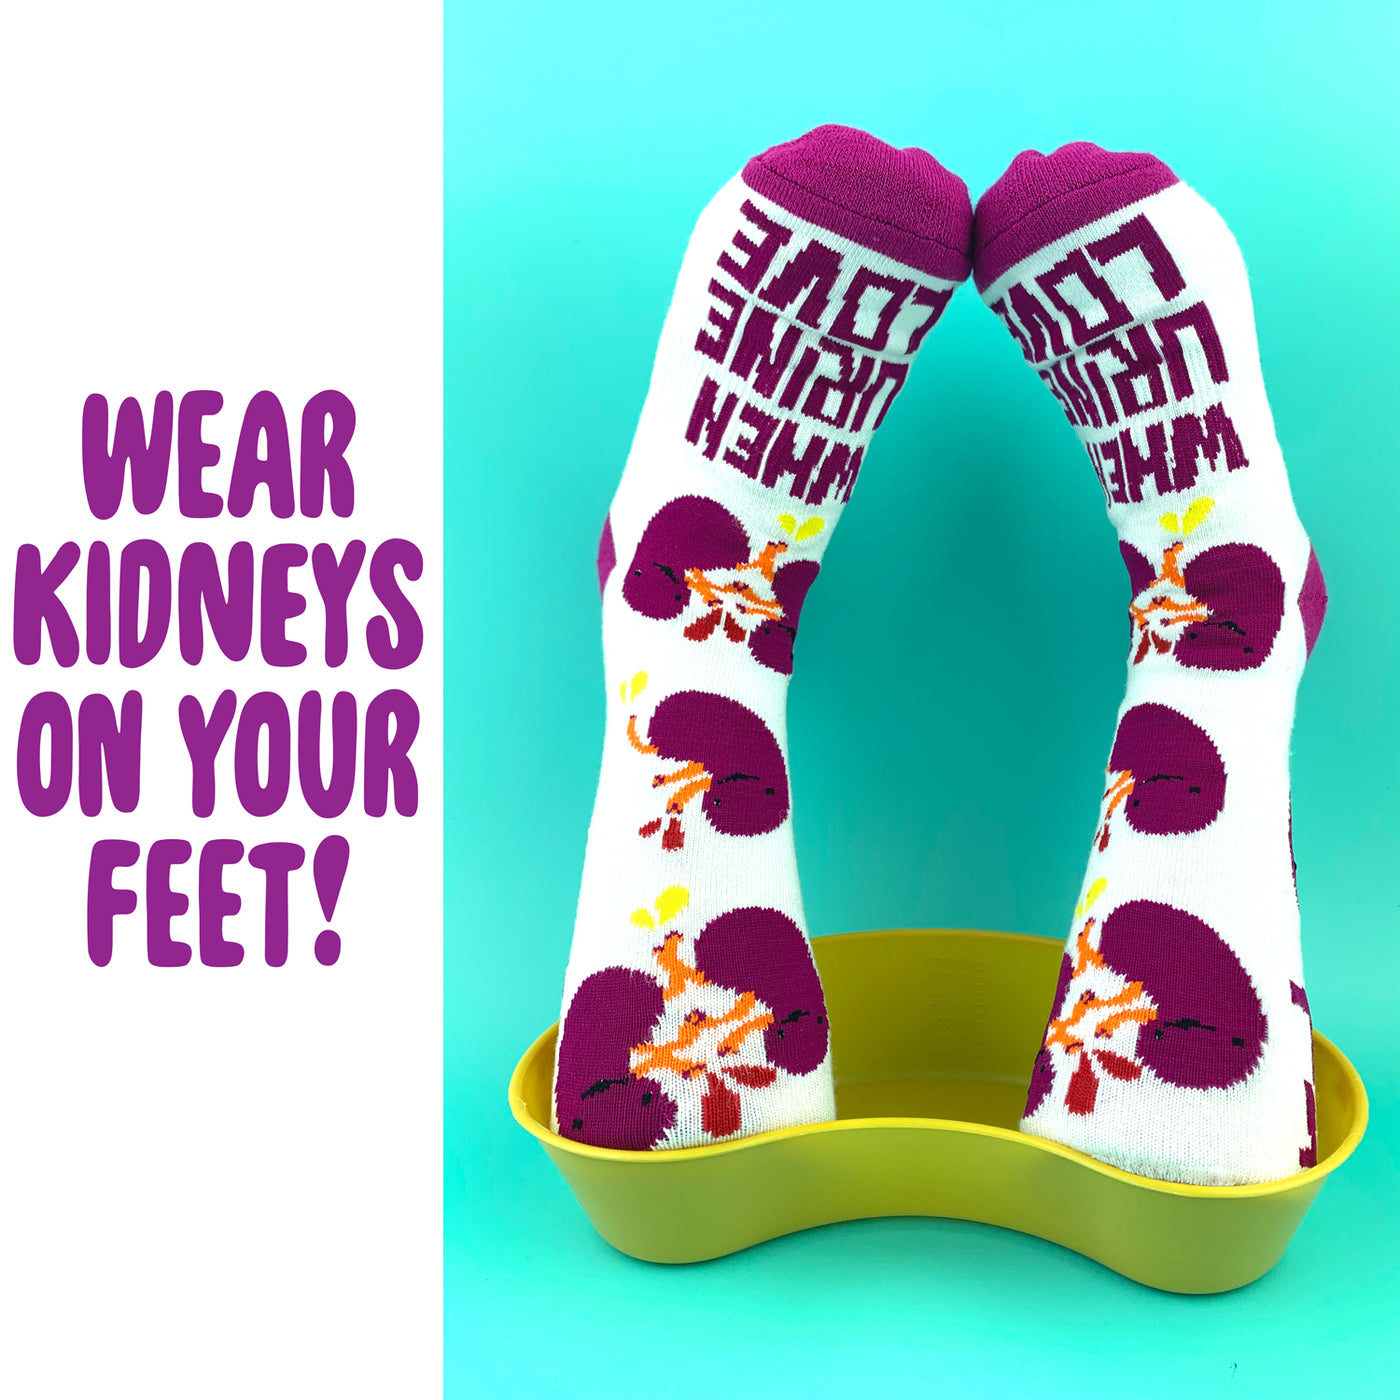 Kidney Socks - When Urine Love + Let's Get Renal - I Heart Guts